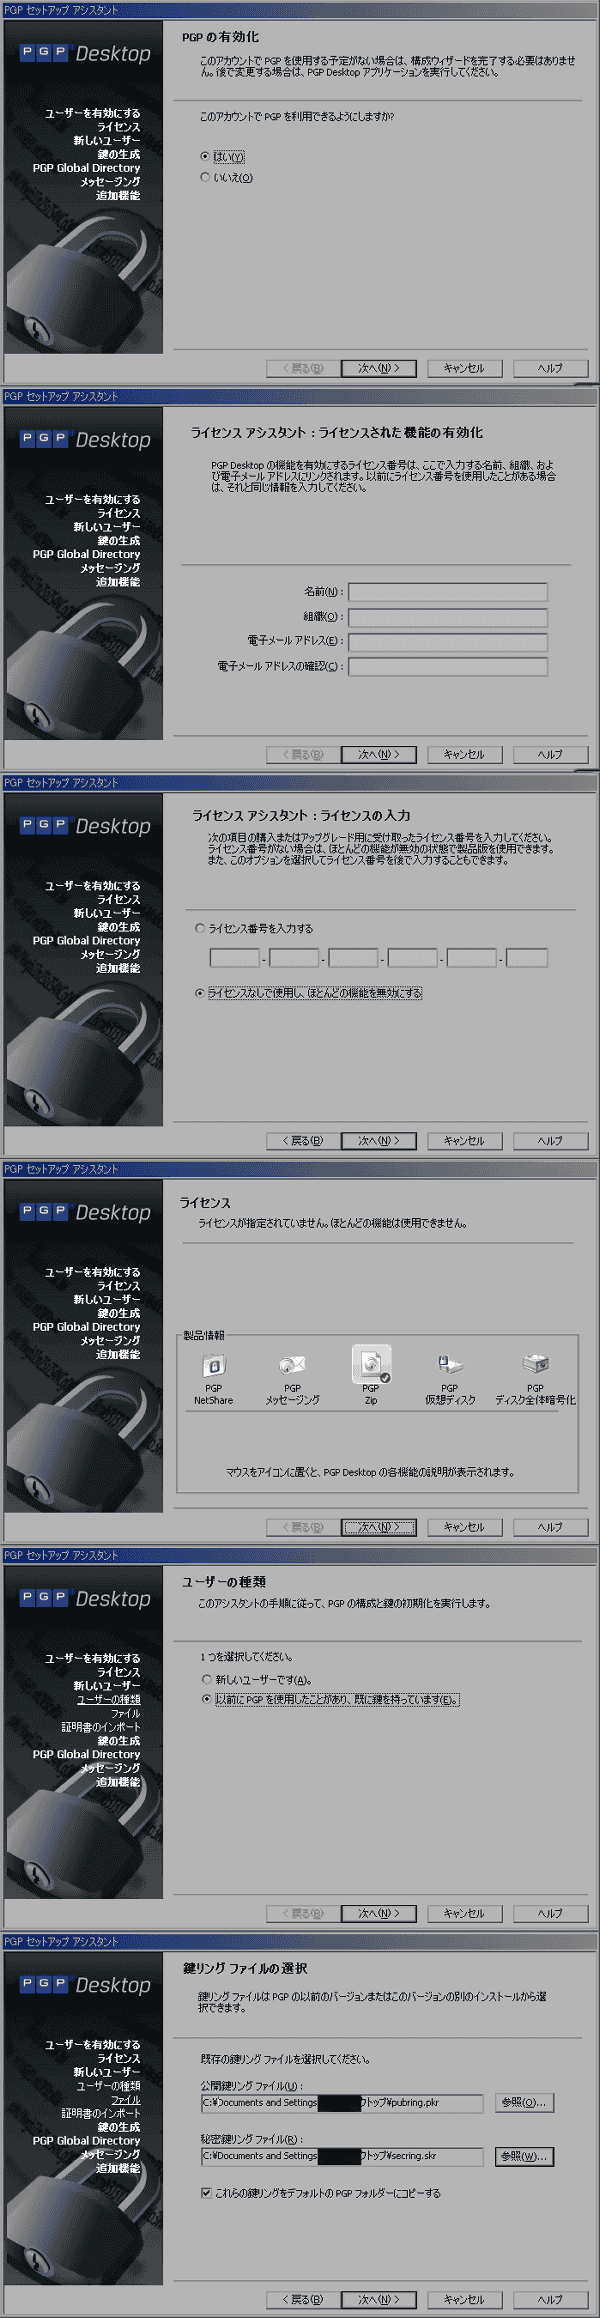 PGP-Desktop_001.png